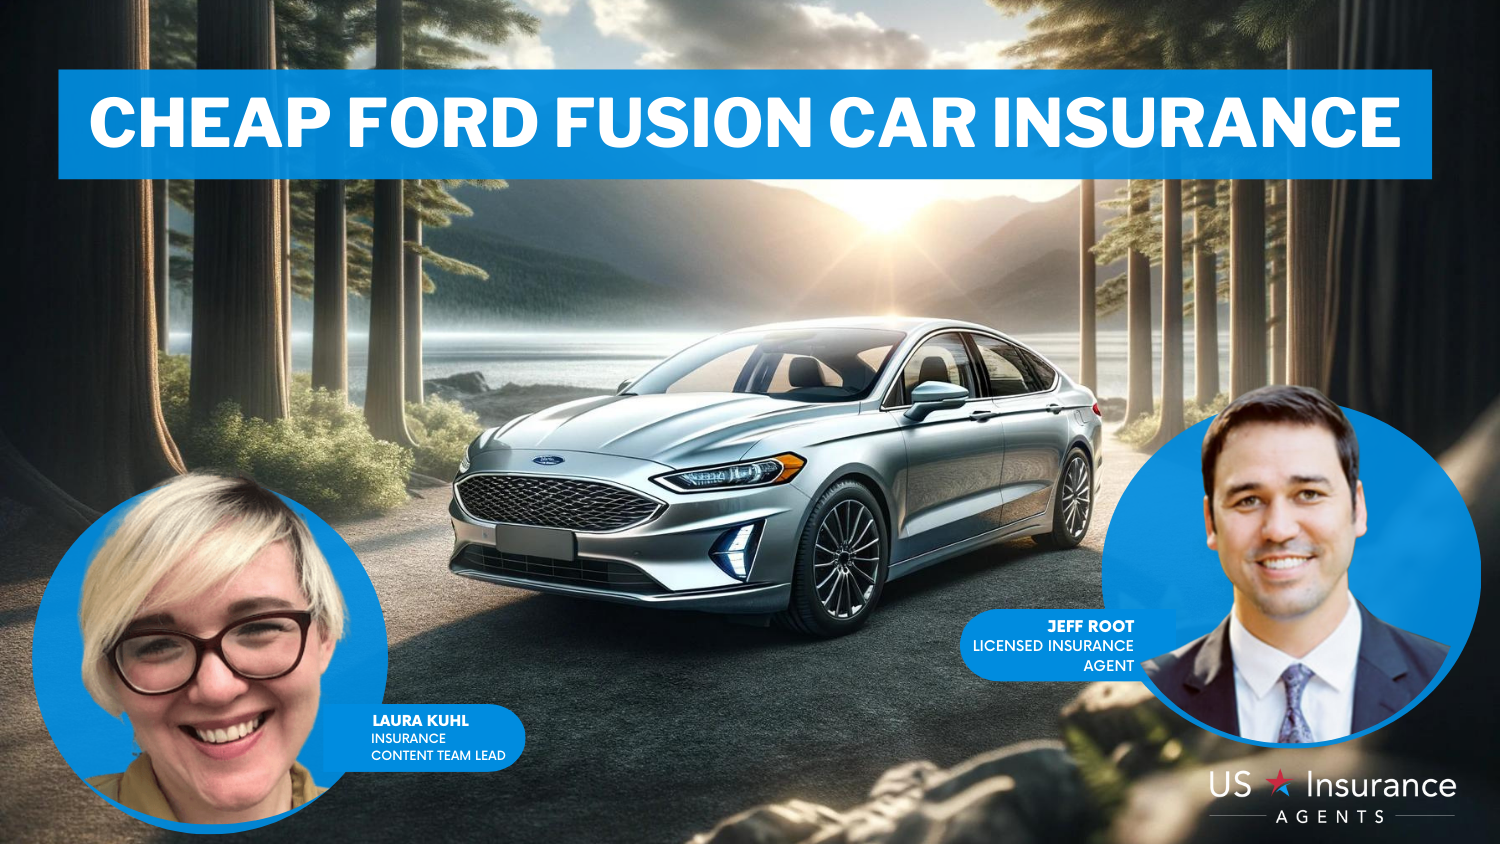 Progressive, Travelers, State Farm: Cheap Ford Fusion Car Insurance